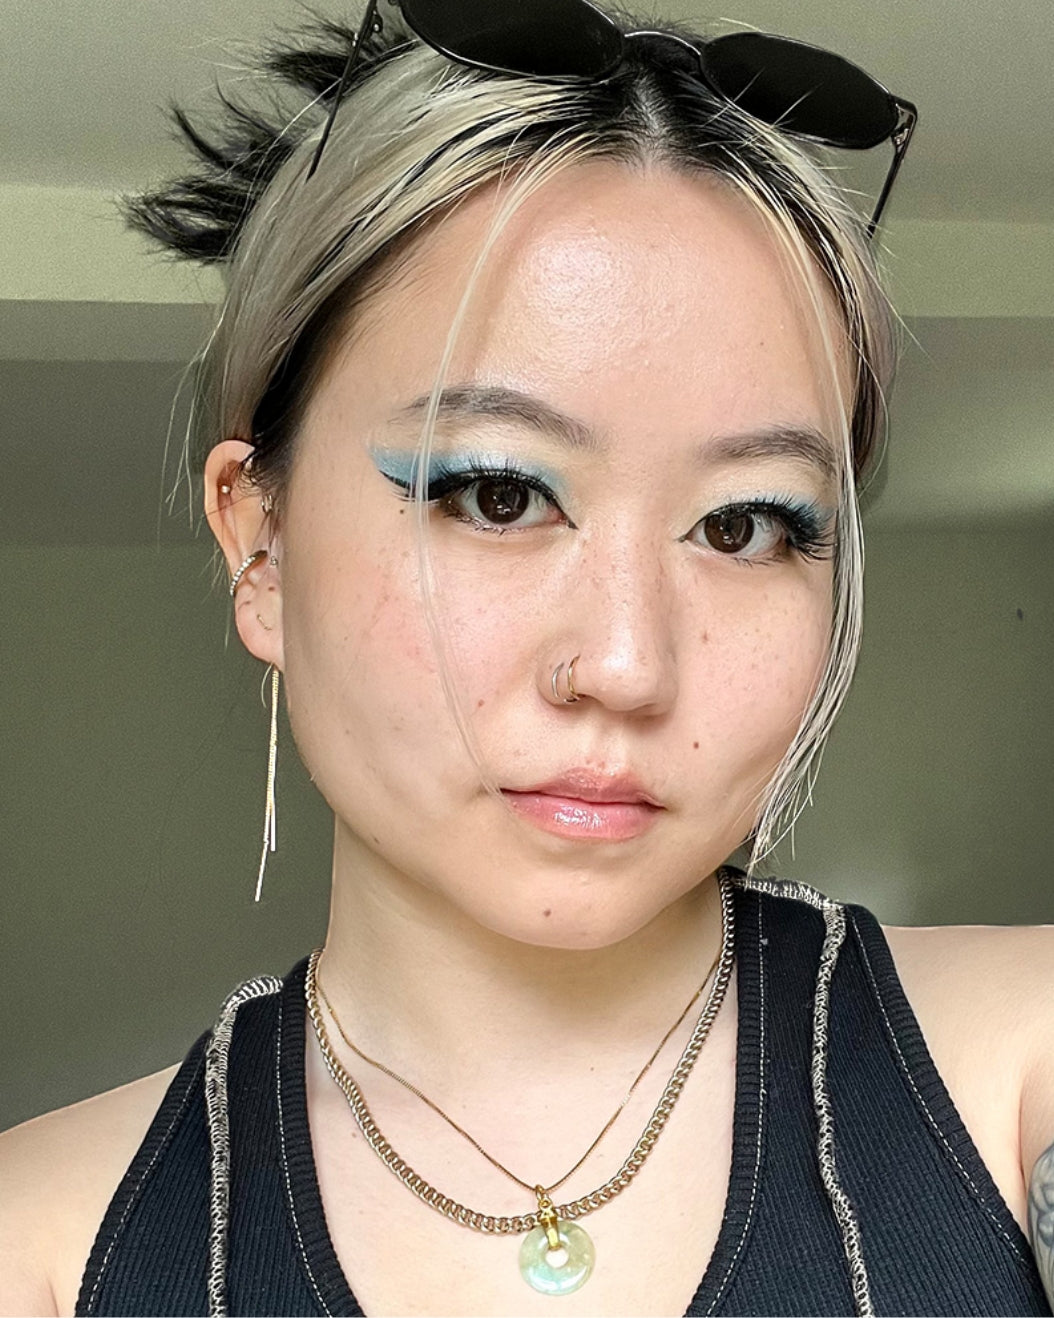 Iley wears Milk Makeup Color Chalk to create a frosty, blue eyeshadow